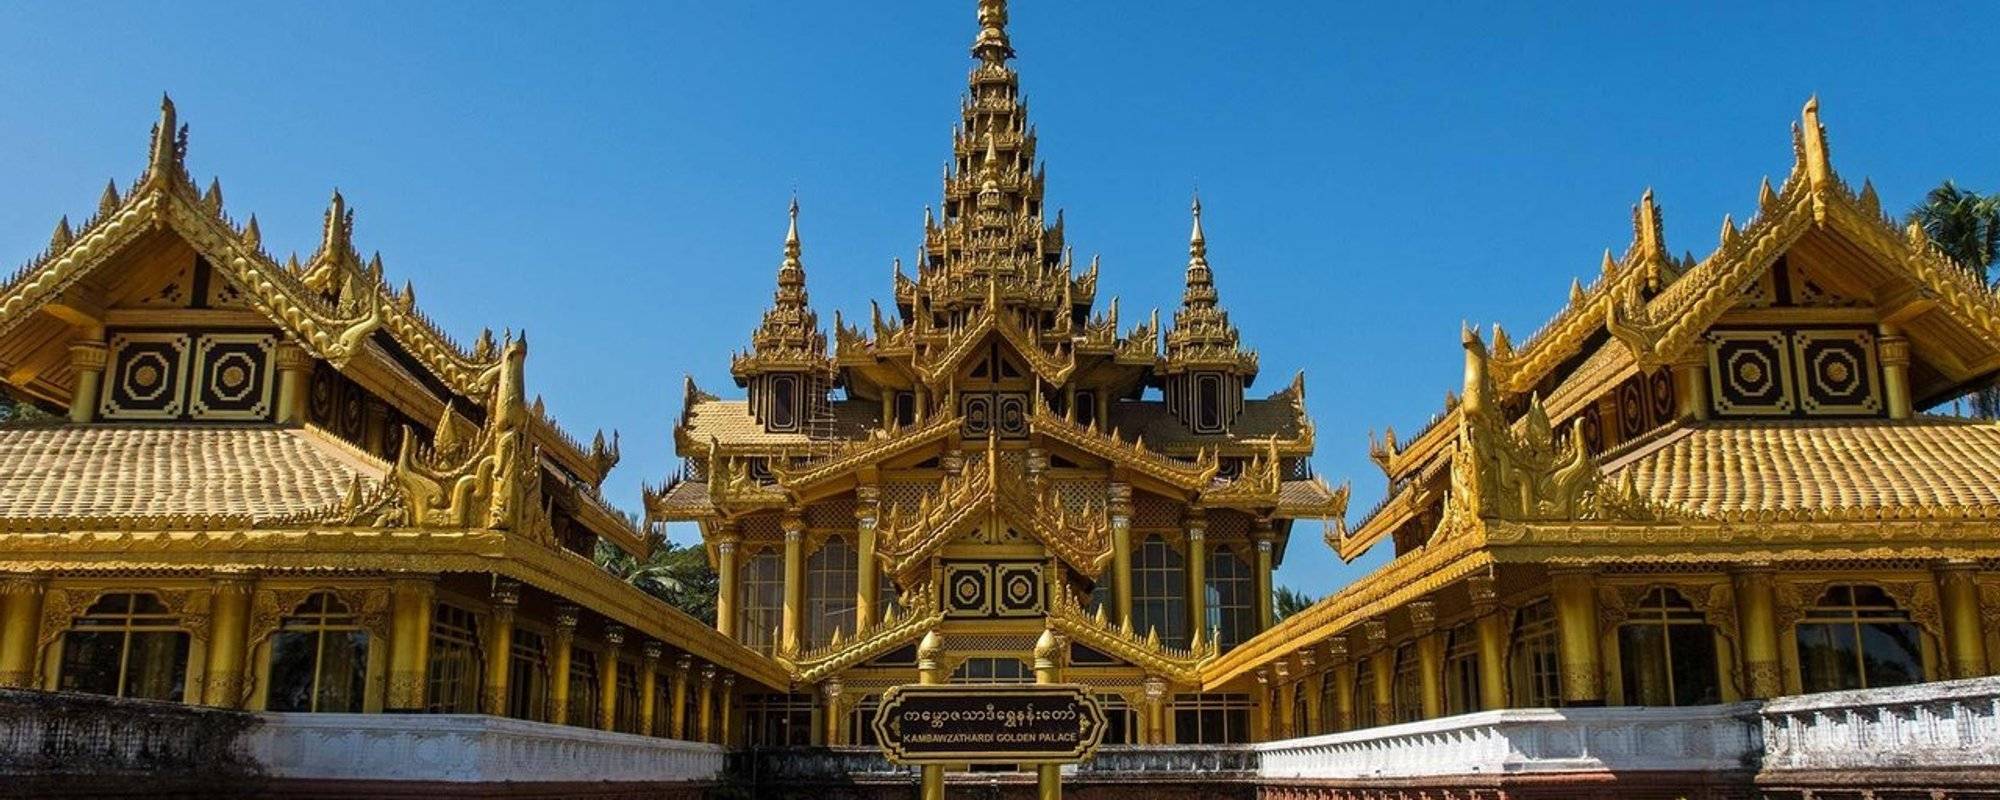 Myanmar: Bago - a town full of temples